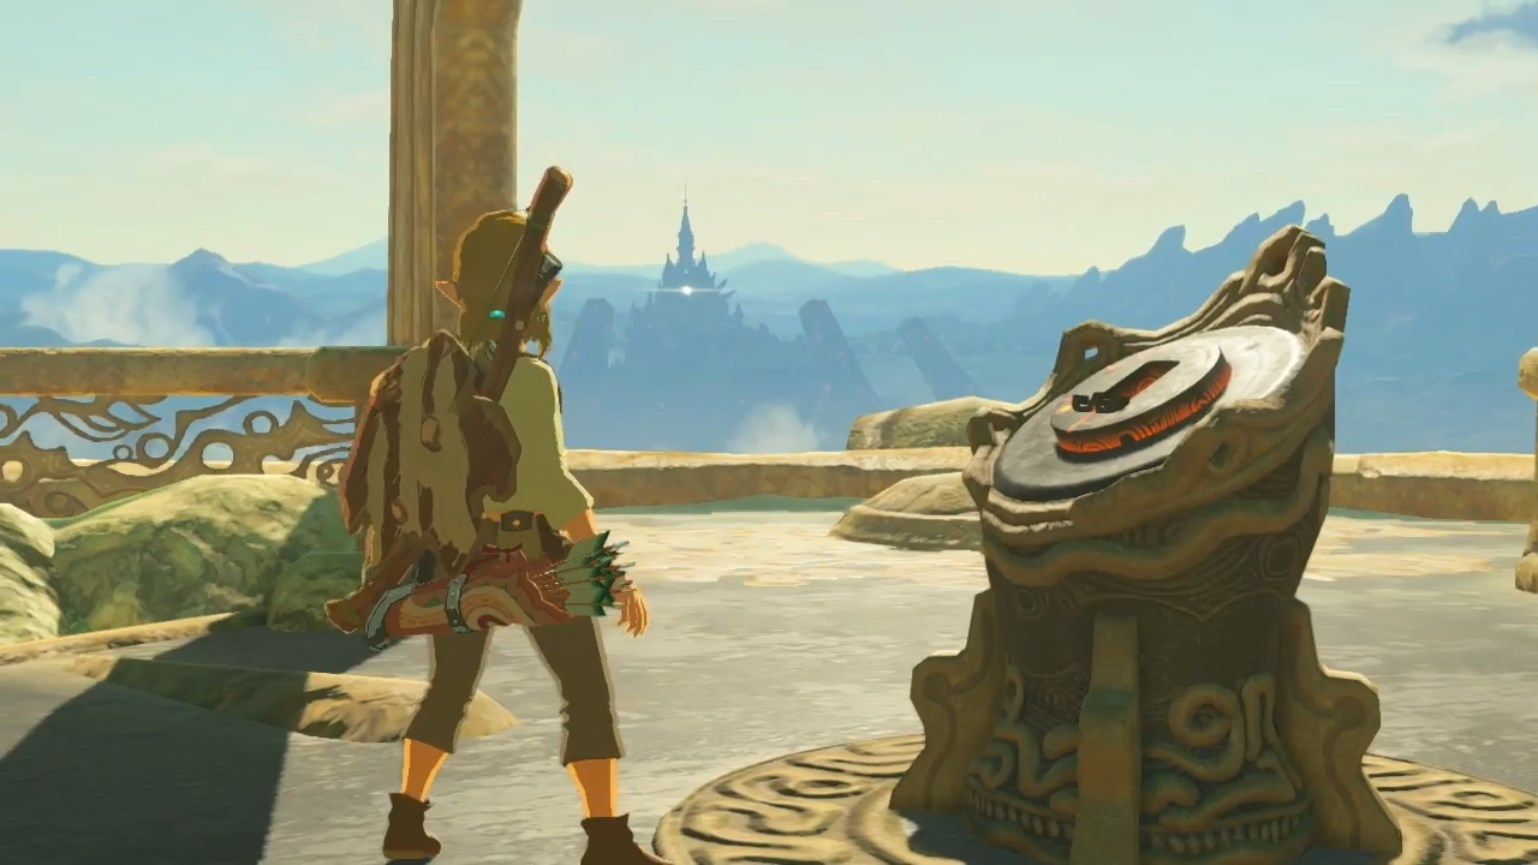 Zelda: Breath of Wild Wii U Version Seemingly Leaks Online